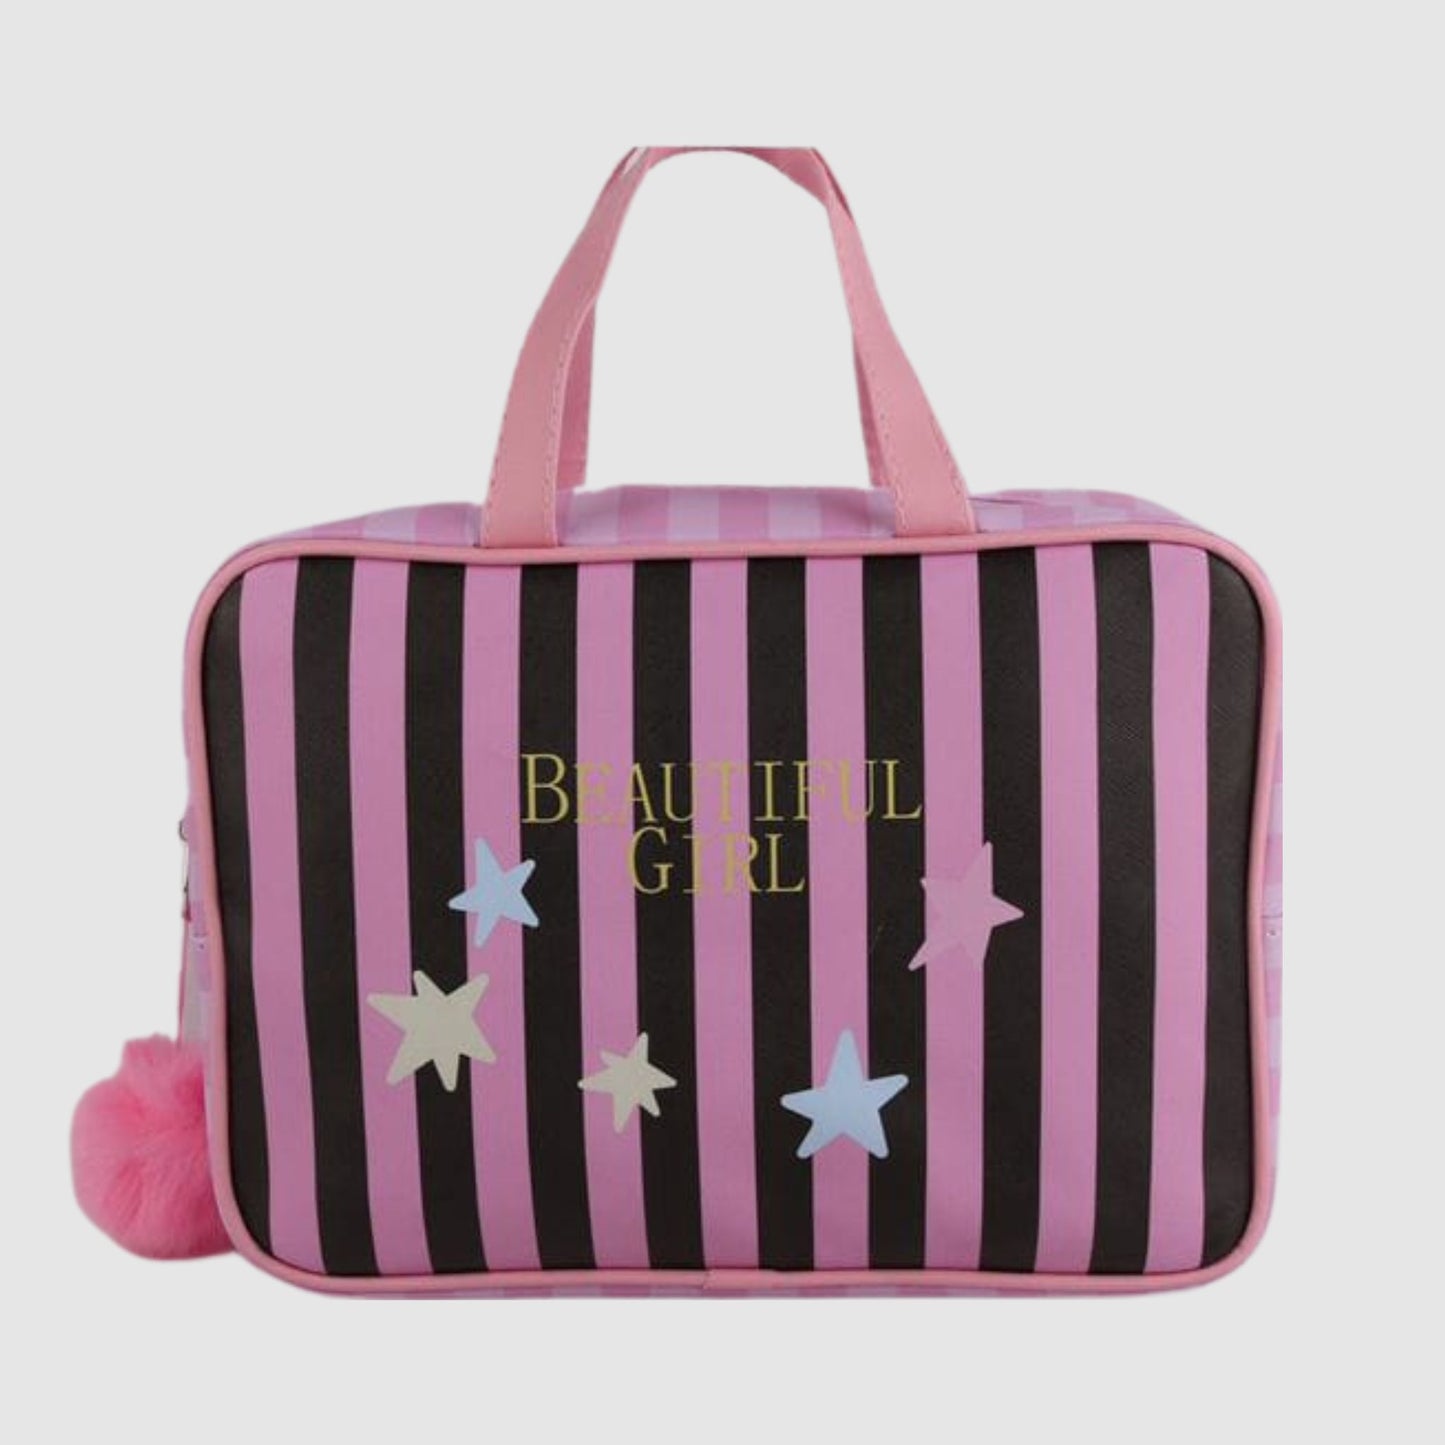 A3150 Beautiful Girl Cosmetic Bag